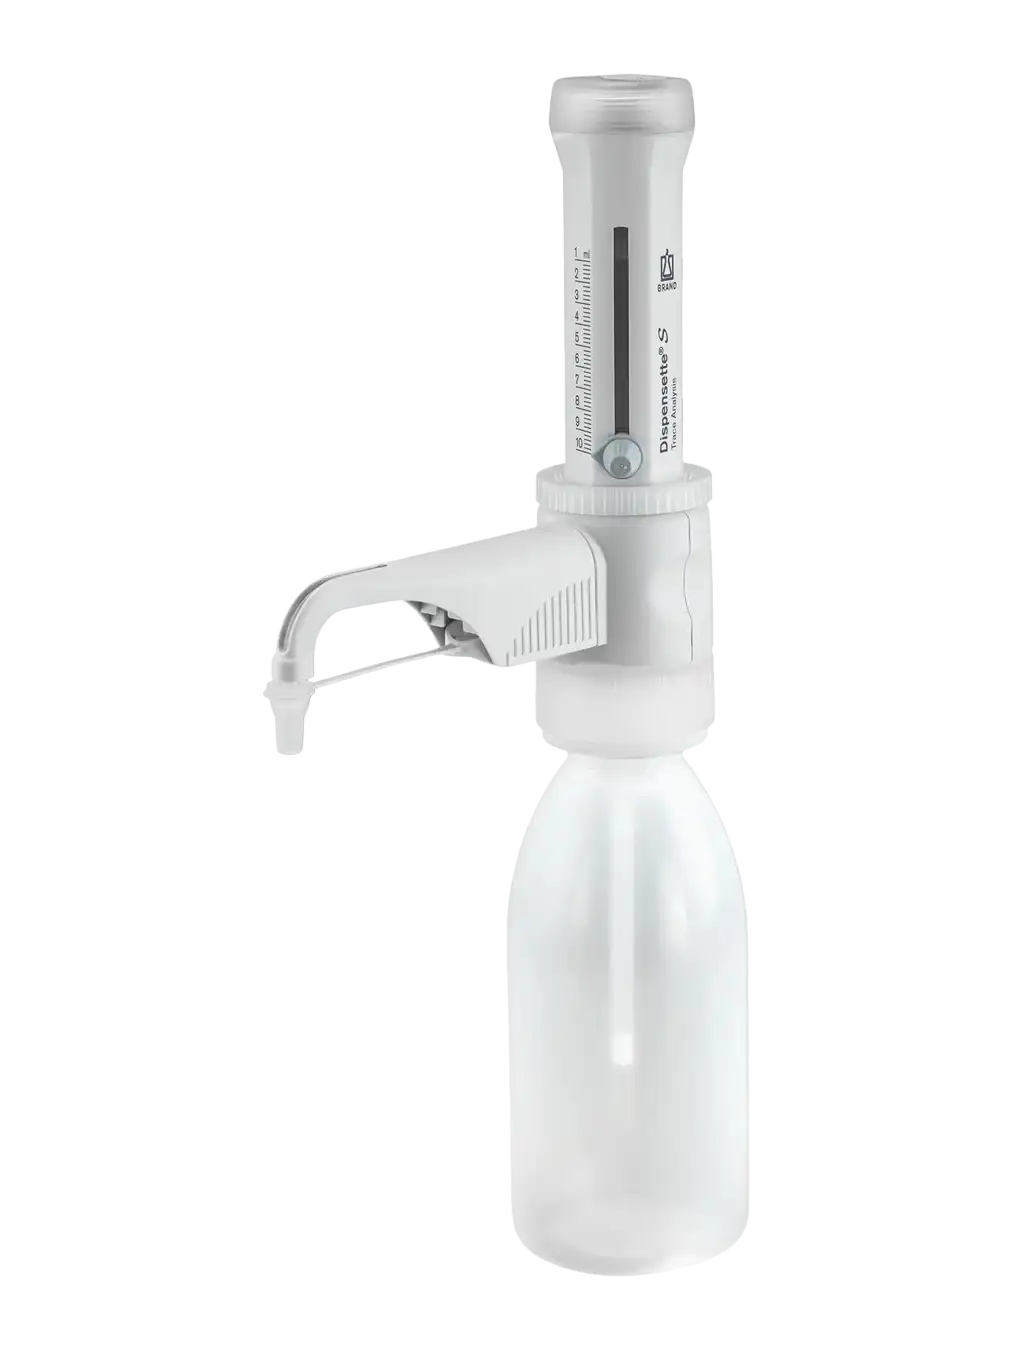 Bottle-Top Dispenser, Dispensette® S Trace, W/O Valve 1-10 ml Adjustable Volume (Analog), 0,05 ml Accuracy, 0,2 ml Subdivision, Platinum-Iridium Valve Spring